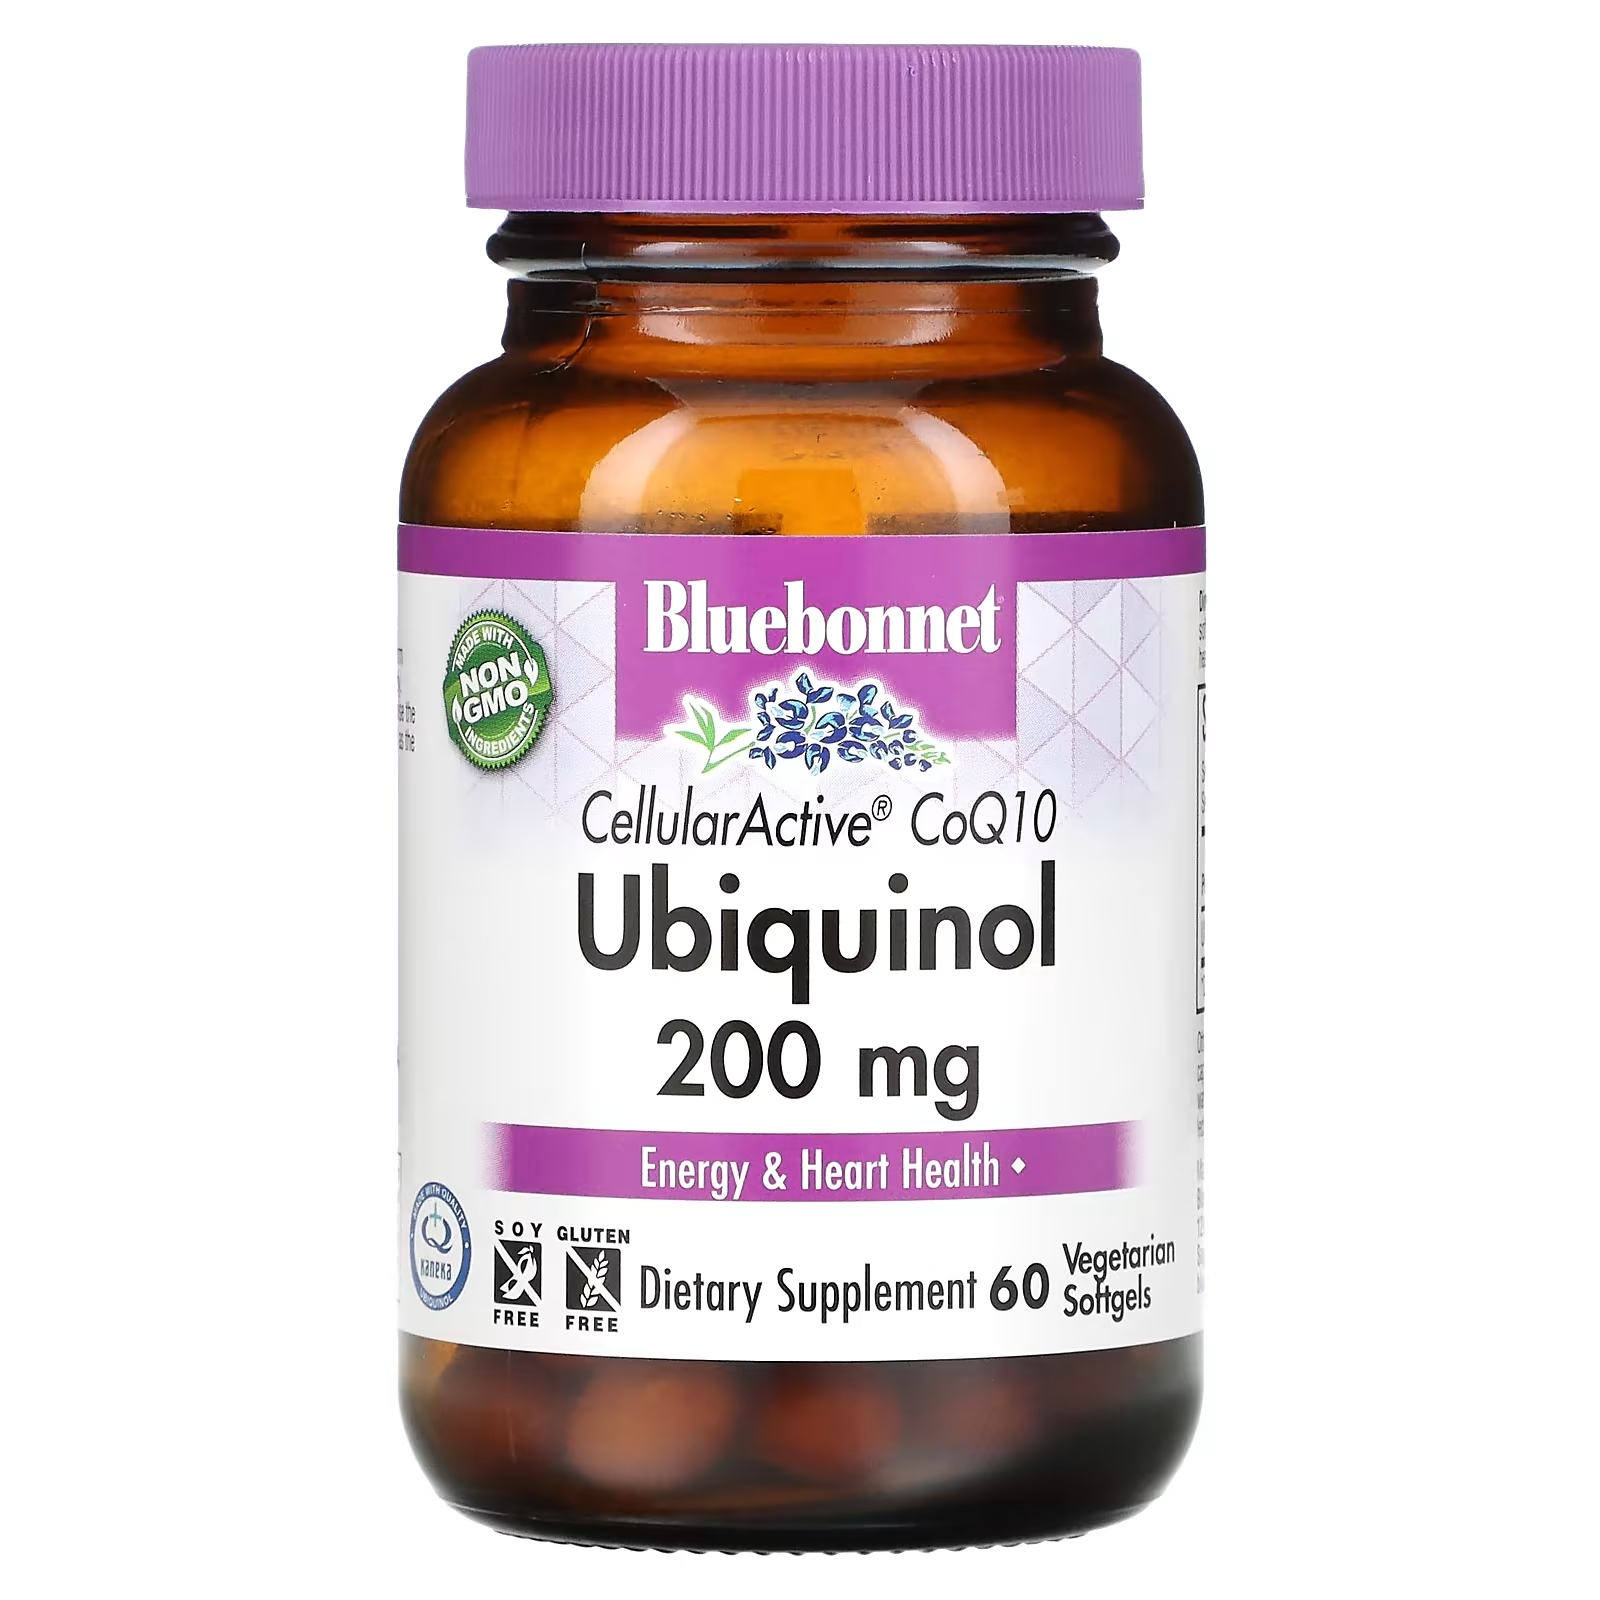 Bluebonnet Nutrition Убихинол CellullarActive CoQ10 200 мг, 60 растительных капсул coq10 200 мг витамин е 60 капсул bluebonnet nutrition